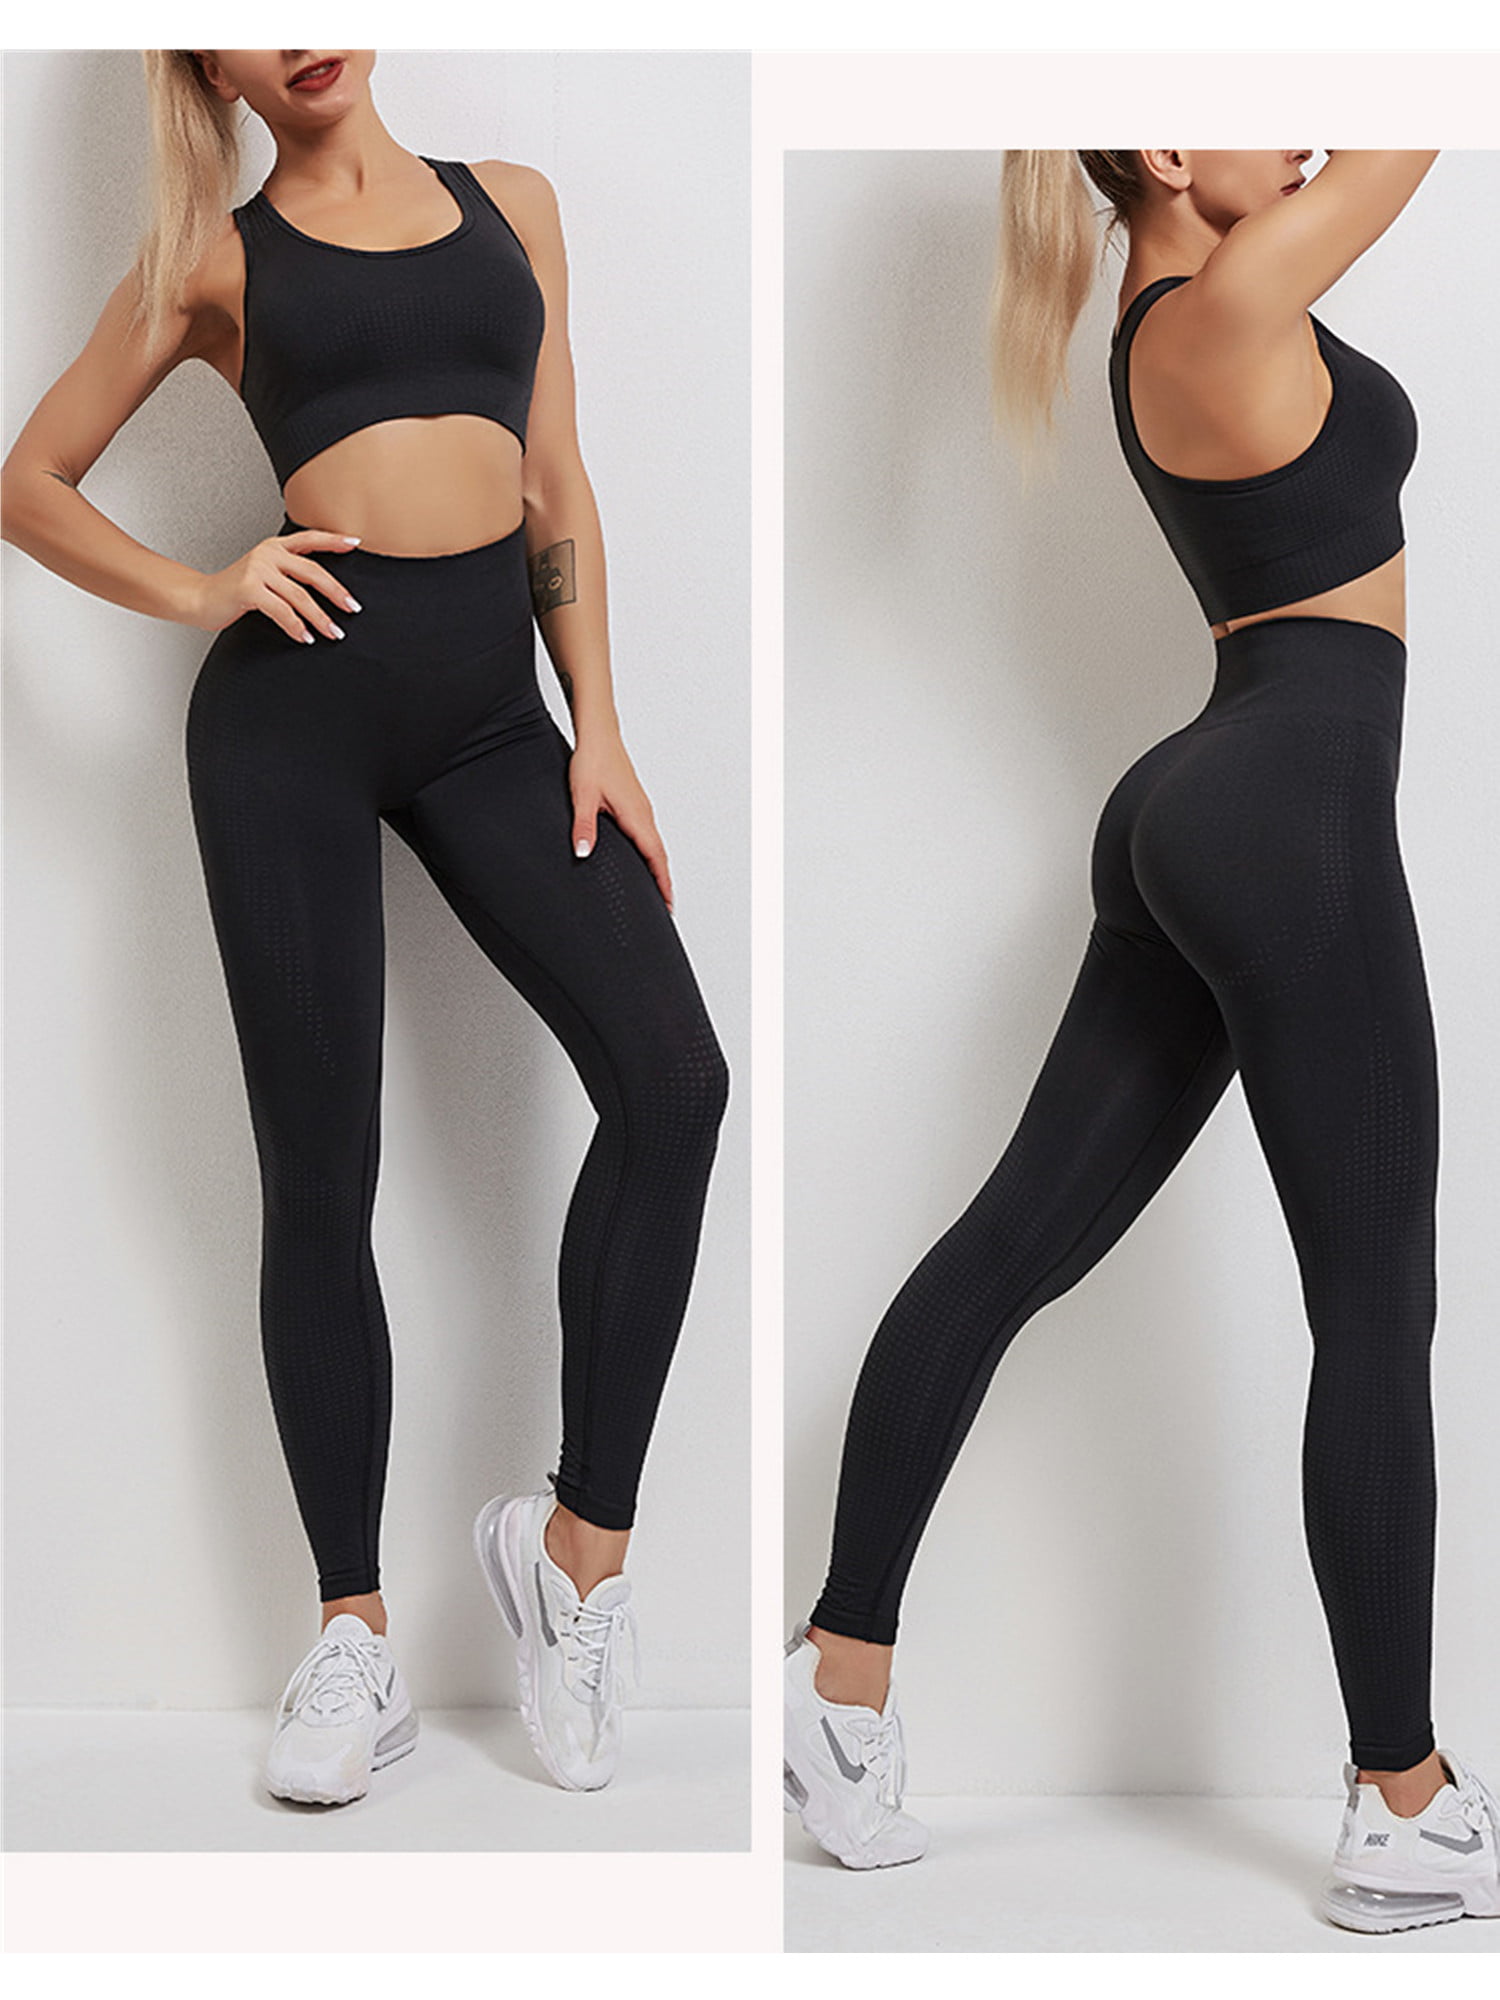 UK Womens Seamless Yoga Suit Crop Top+Legging Bra Pants Gym Workout Fitness Sets